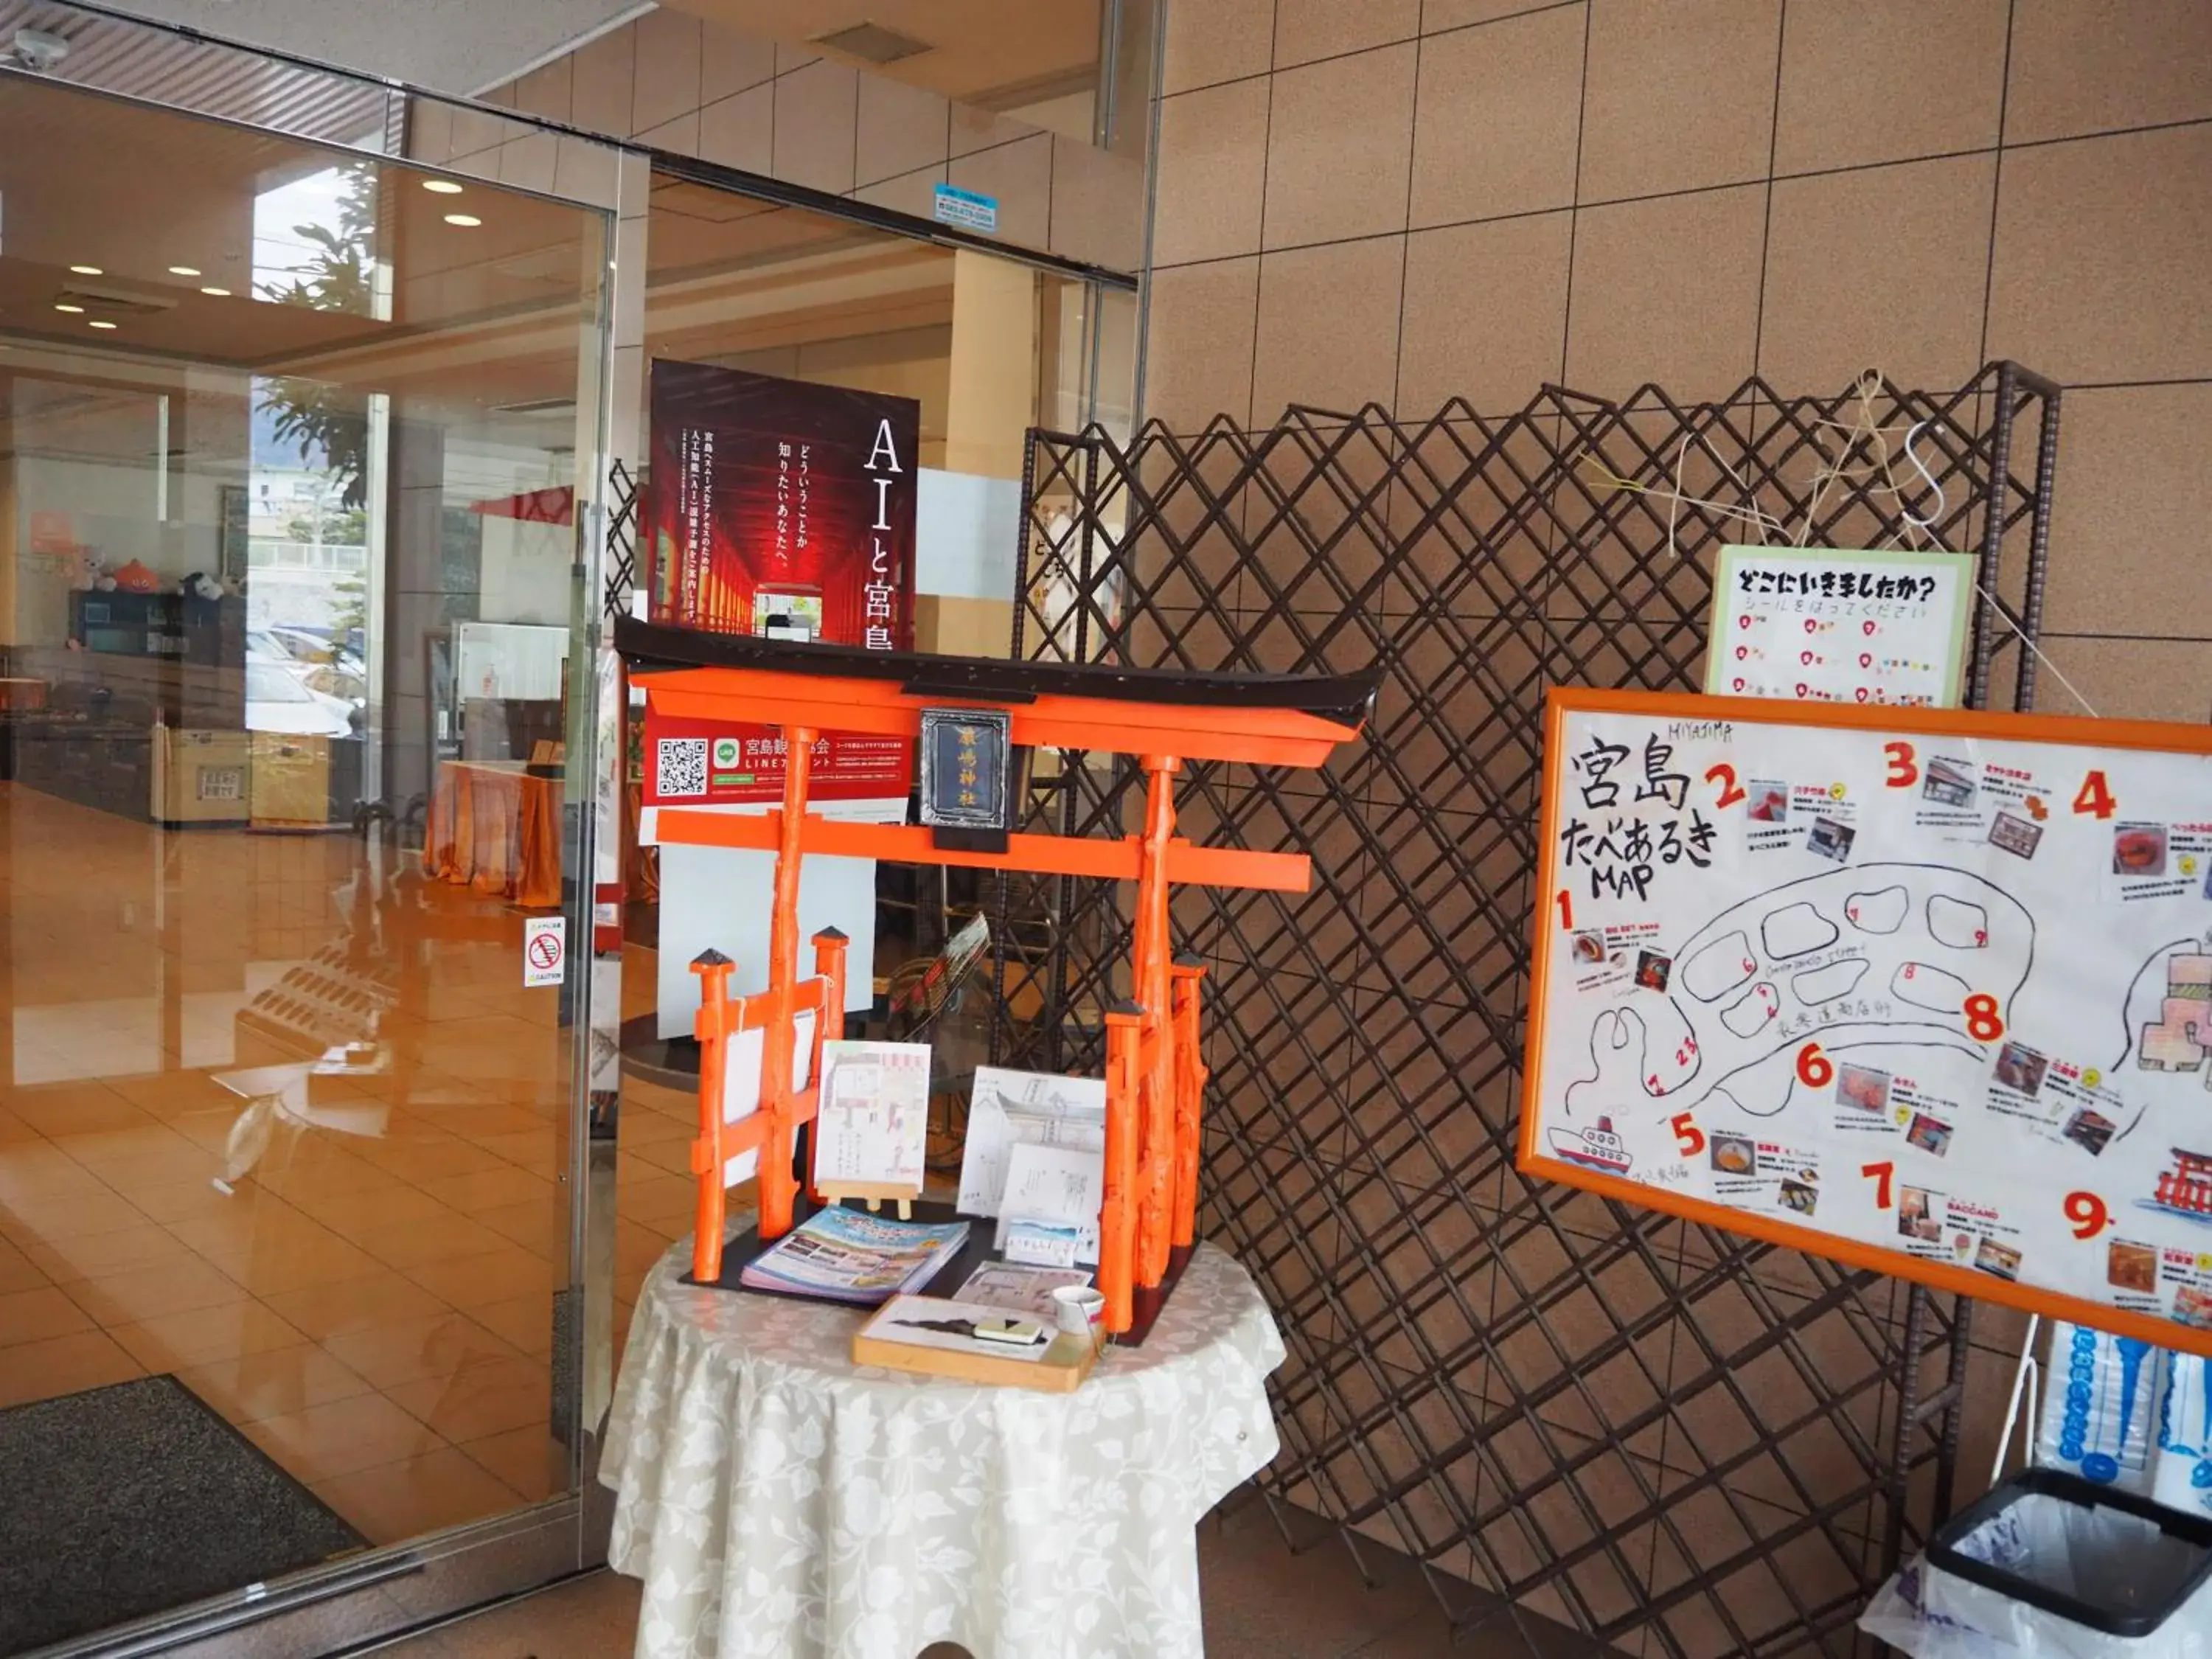 Lobby or reception in Miyajima Coral Hotel